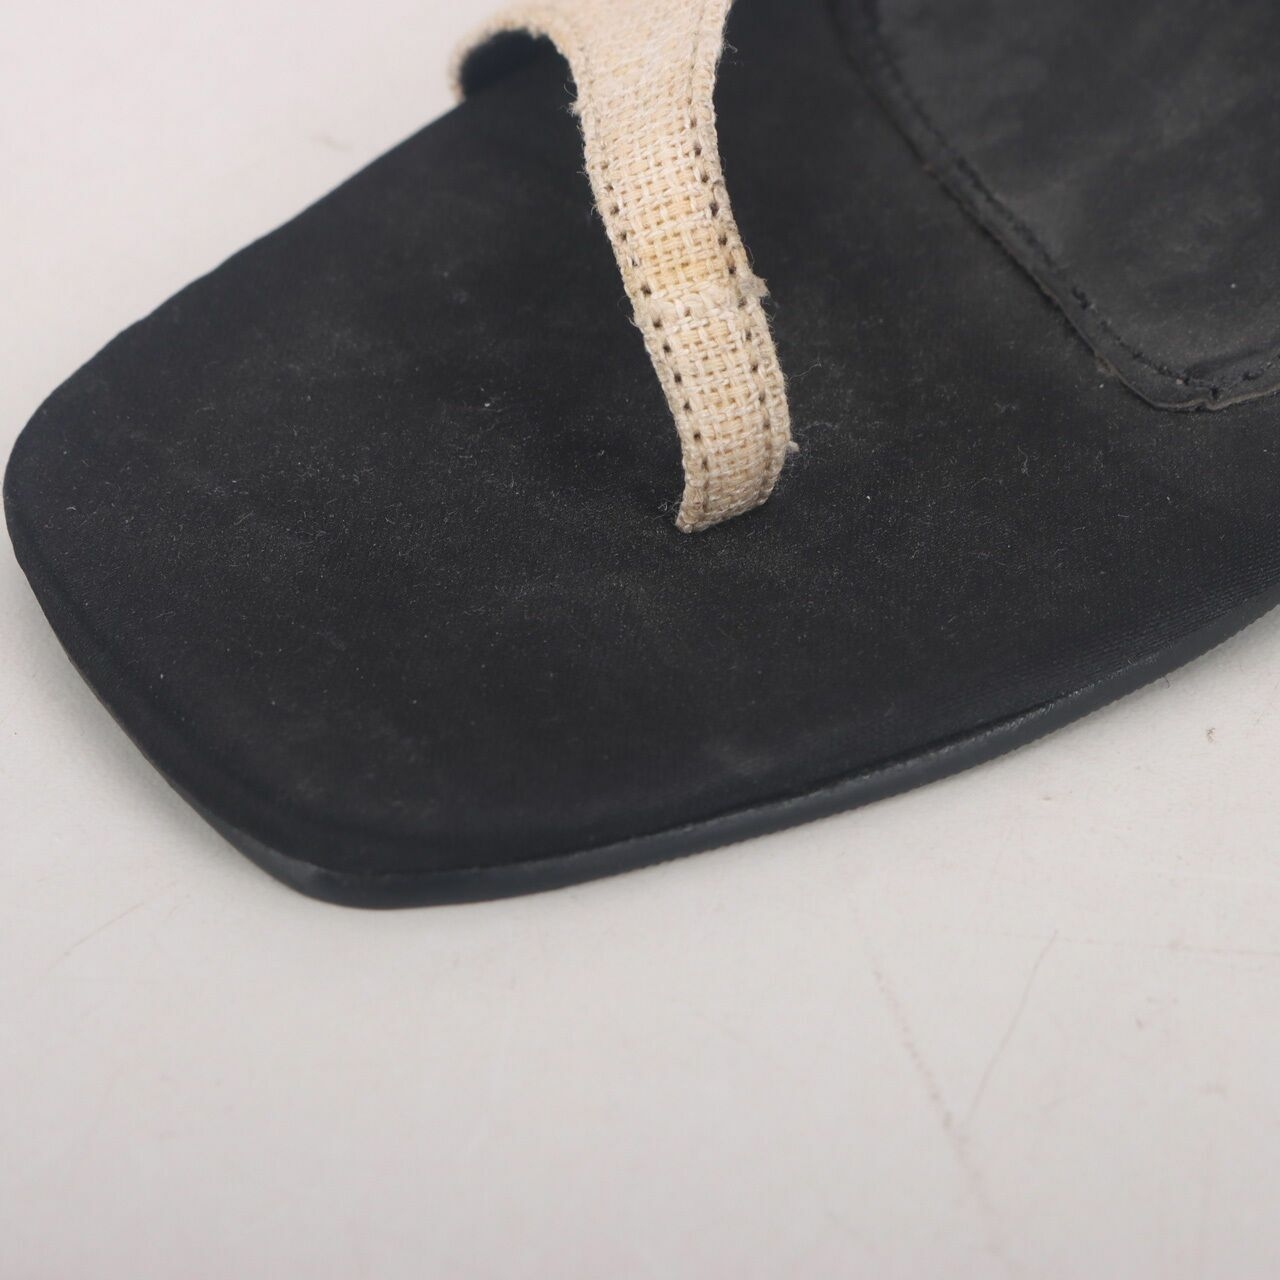 Chapelet Black & Ivory Heels